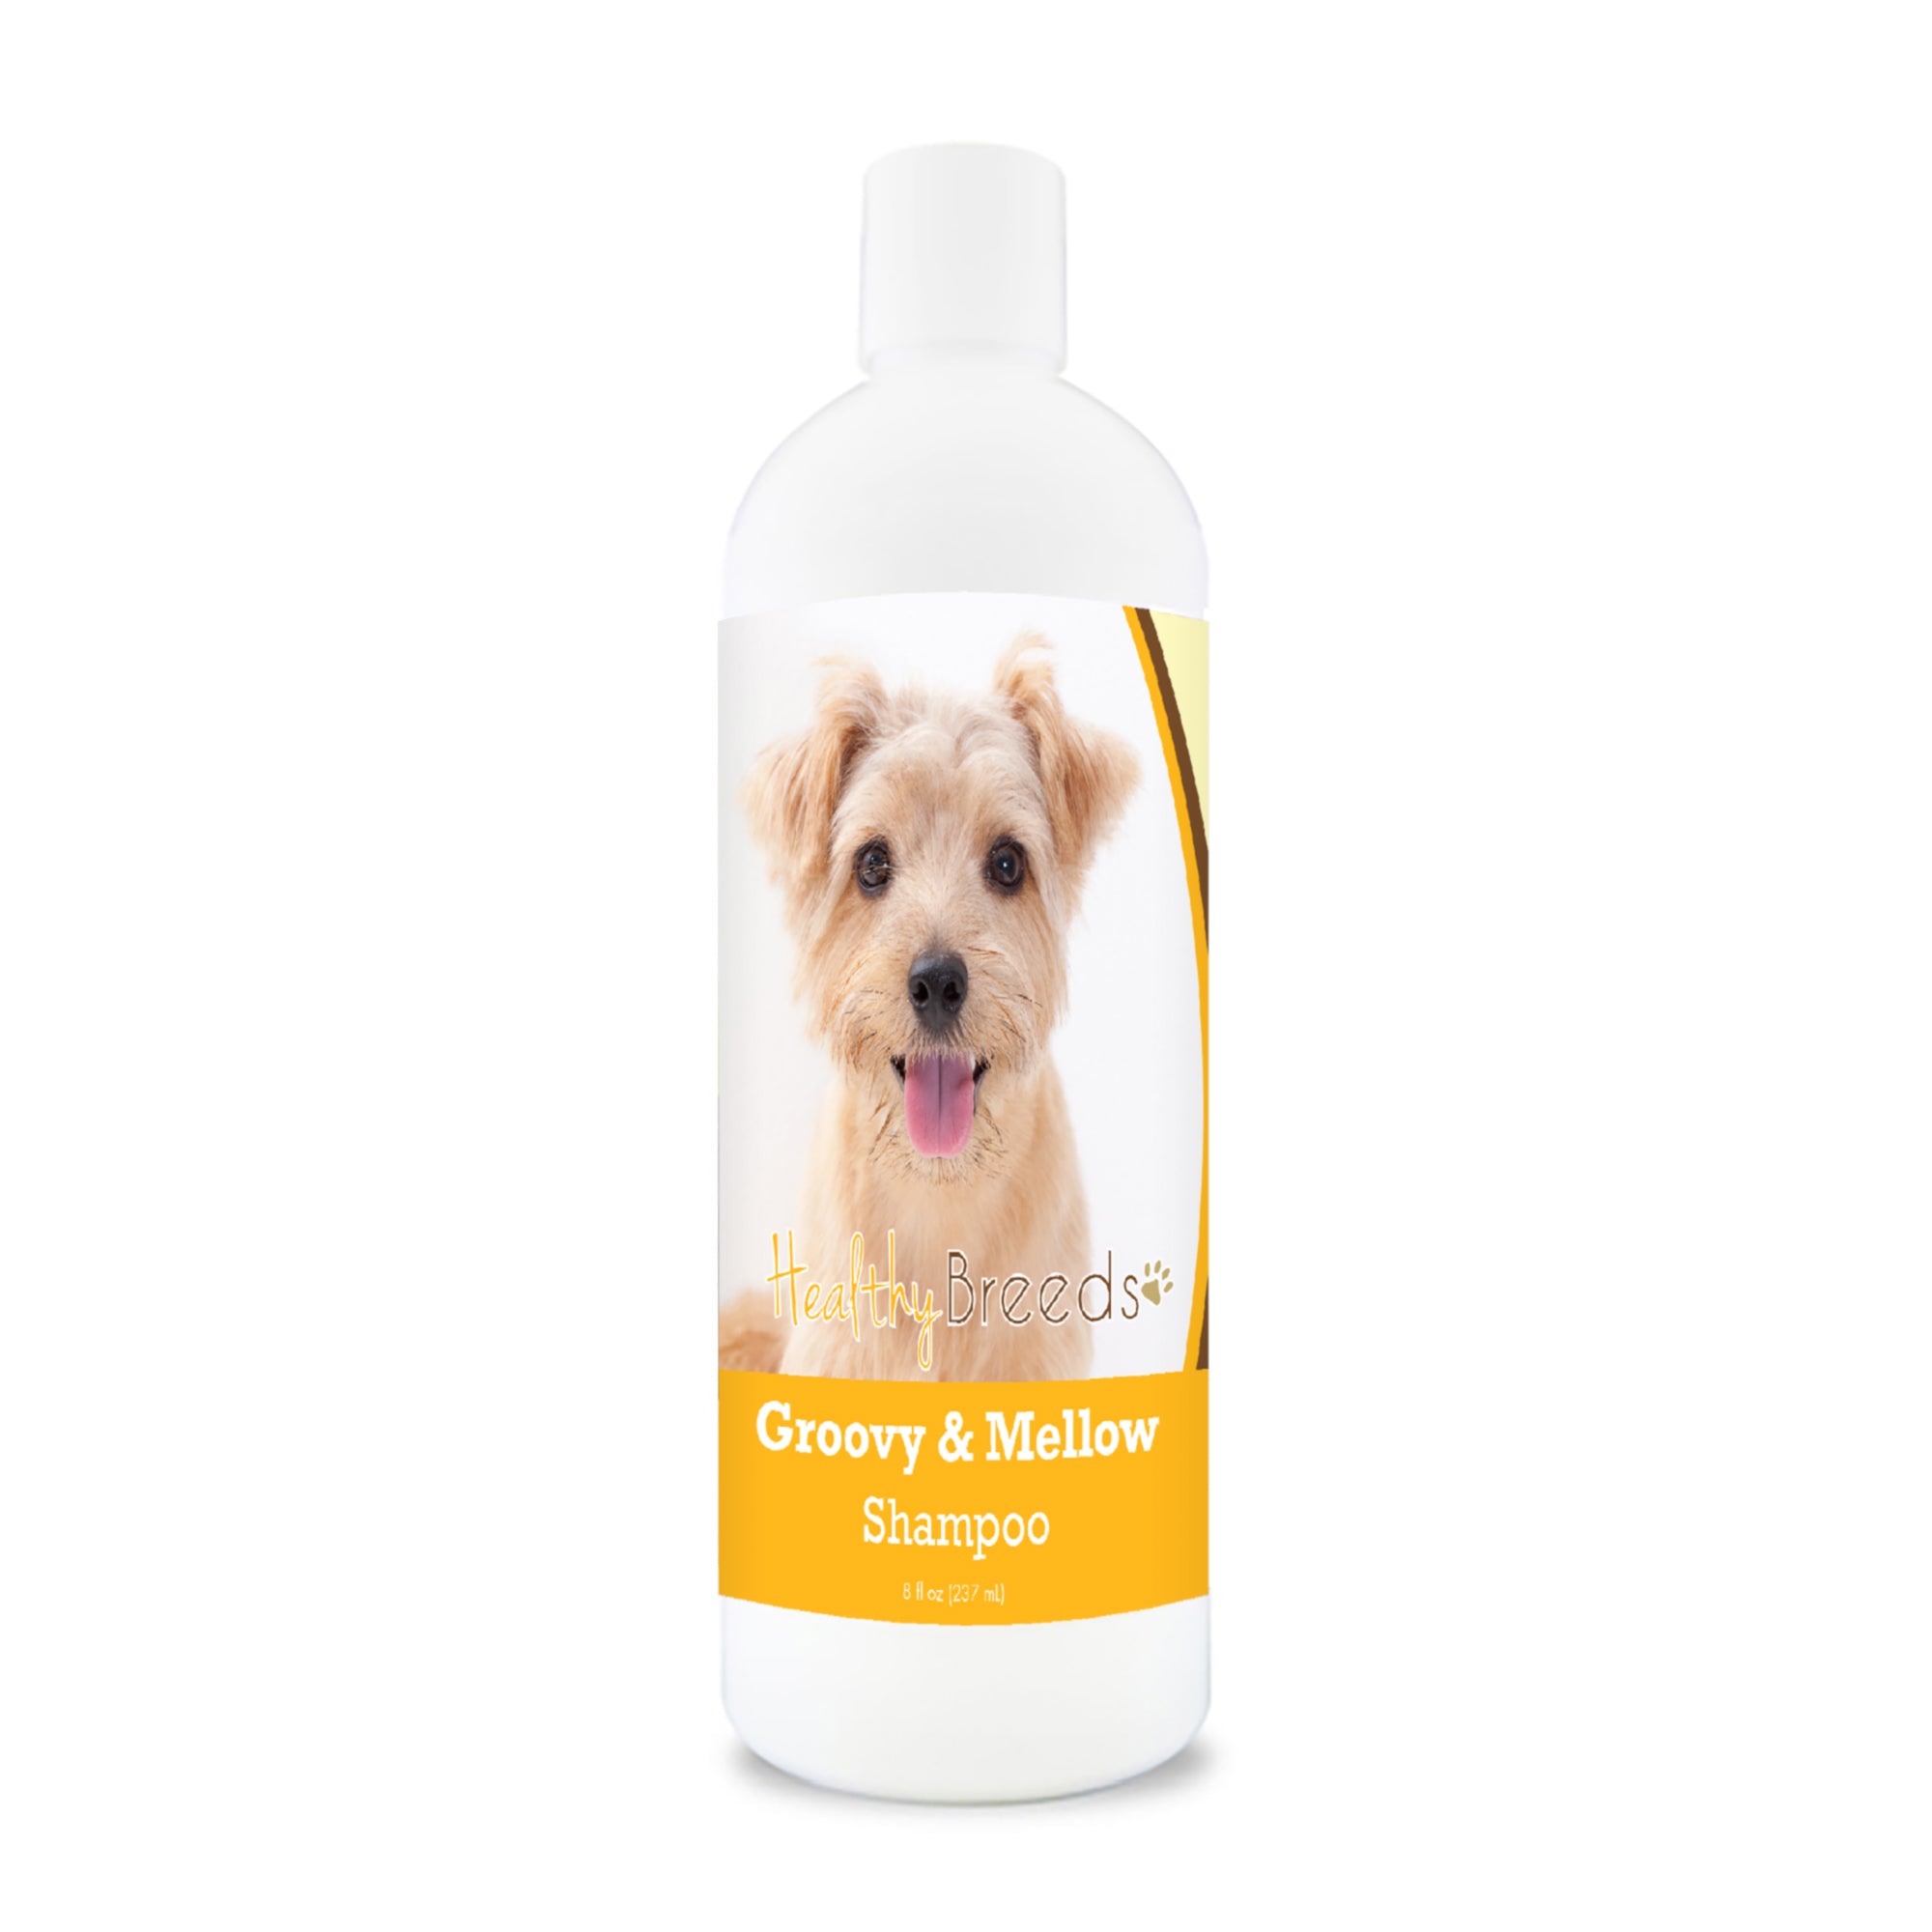 Norfolk Terrier Groovy & Mellow Shampoo 8 oz